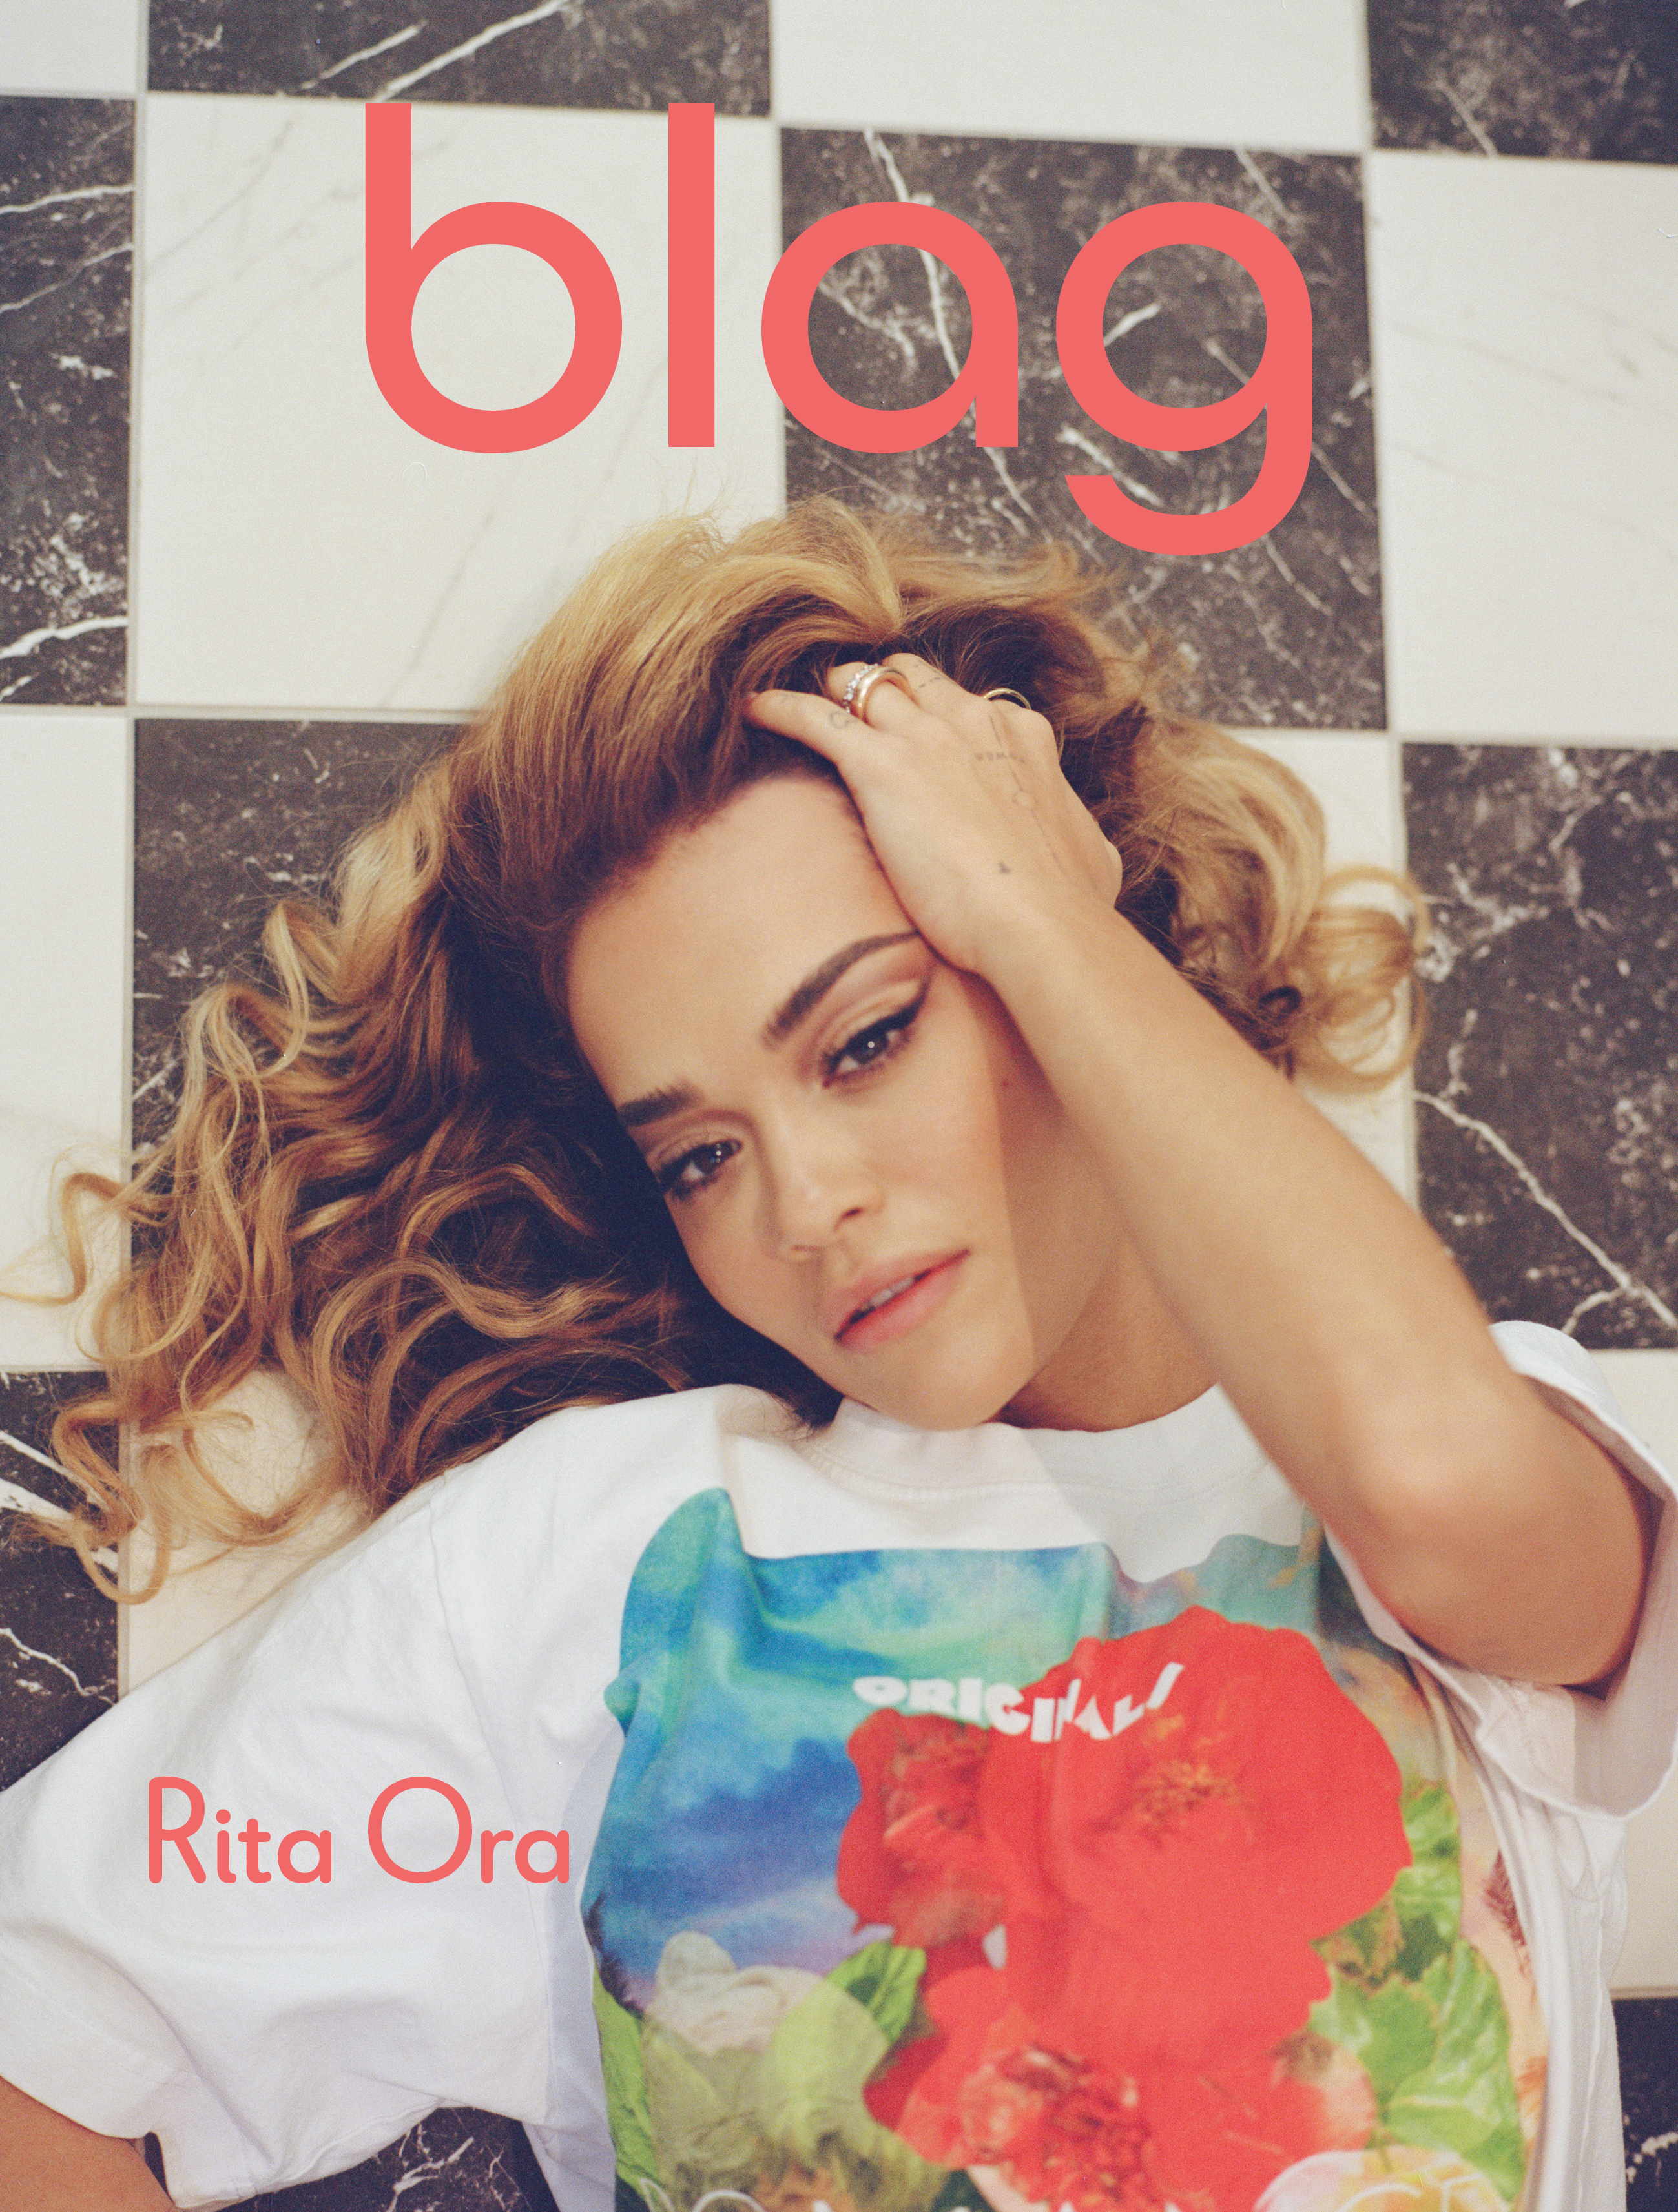 Protected: Rita Ora in ROMANCE